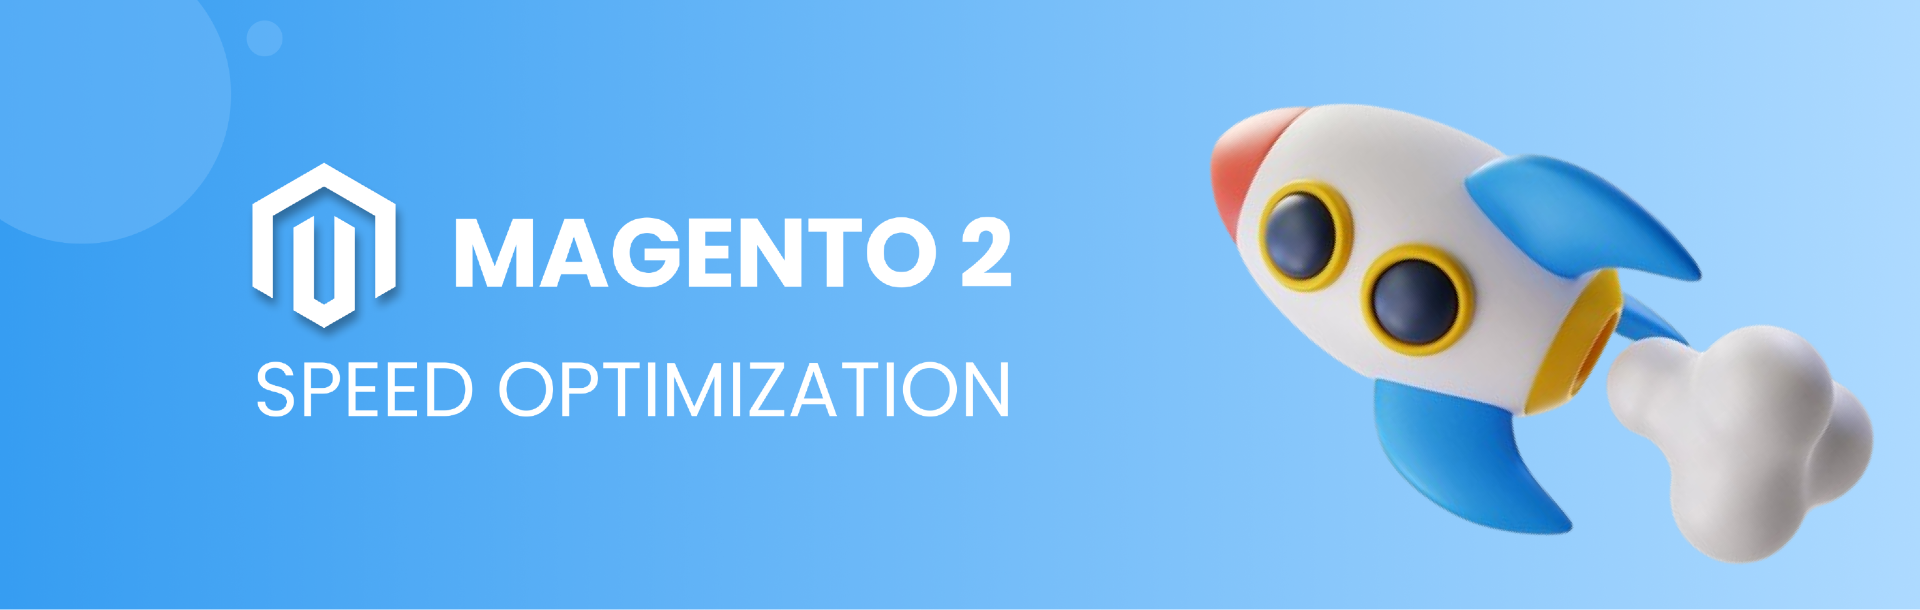 Magento 2 Store Speed Optimization